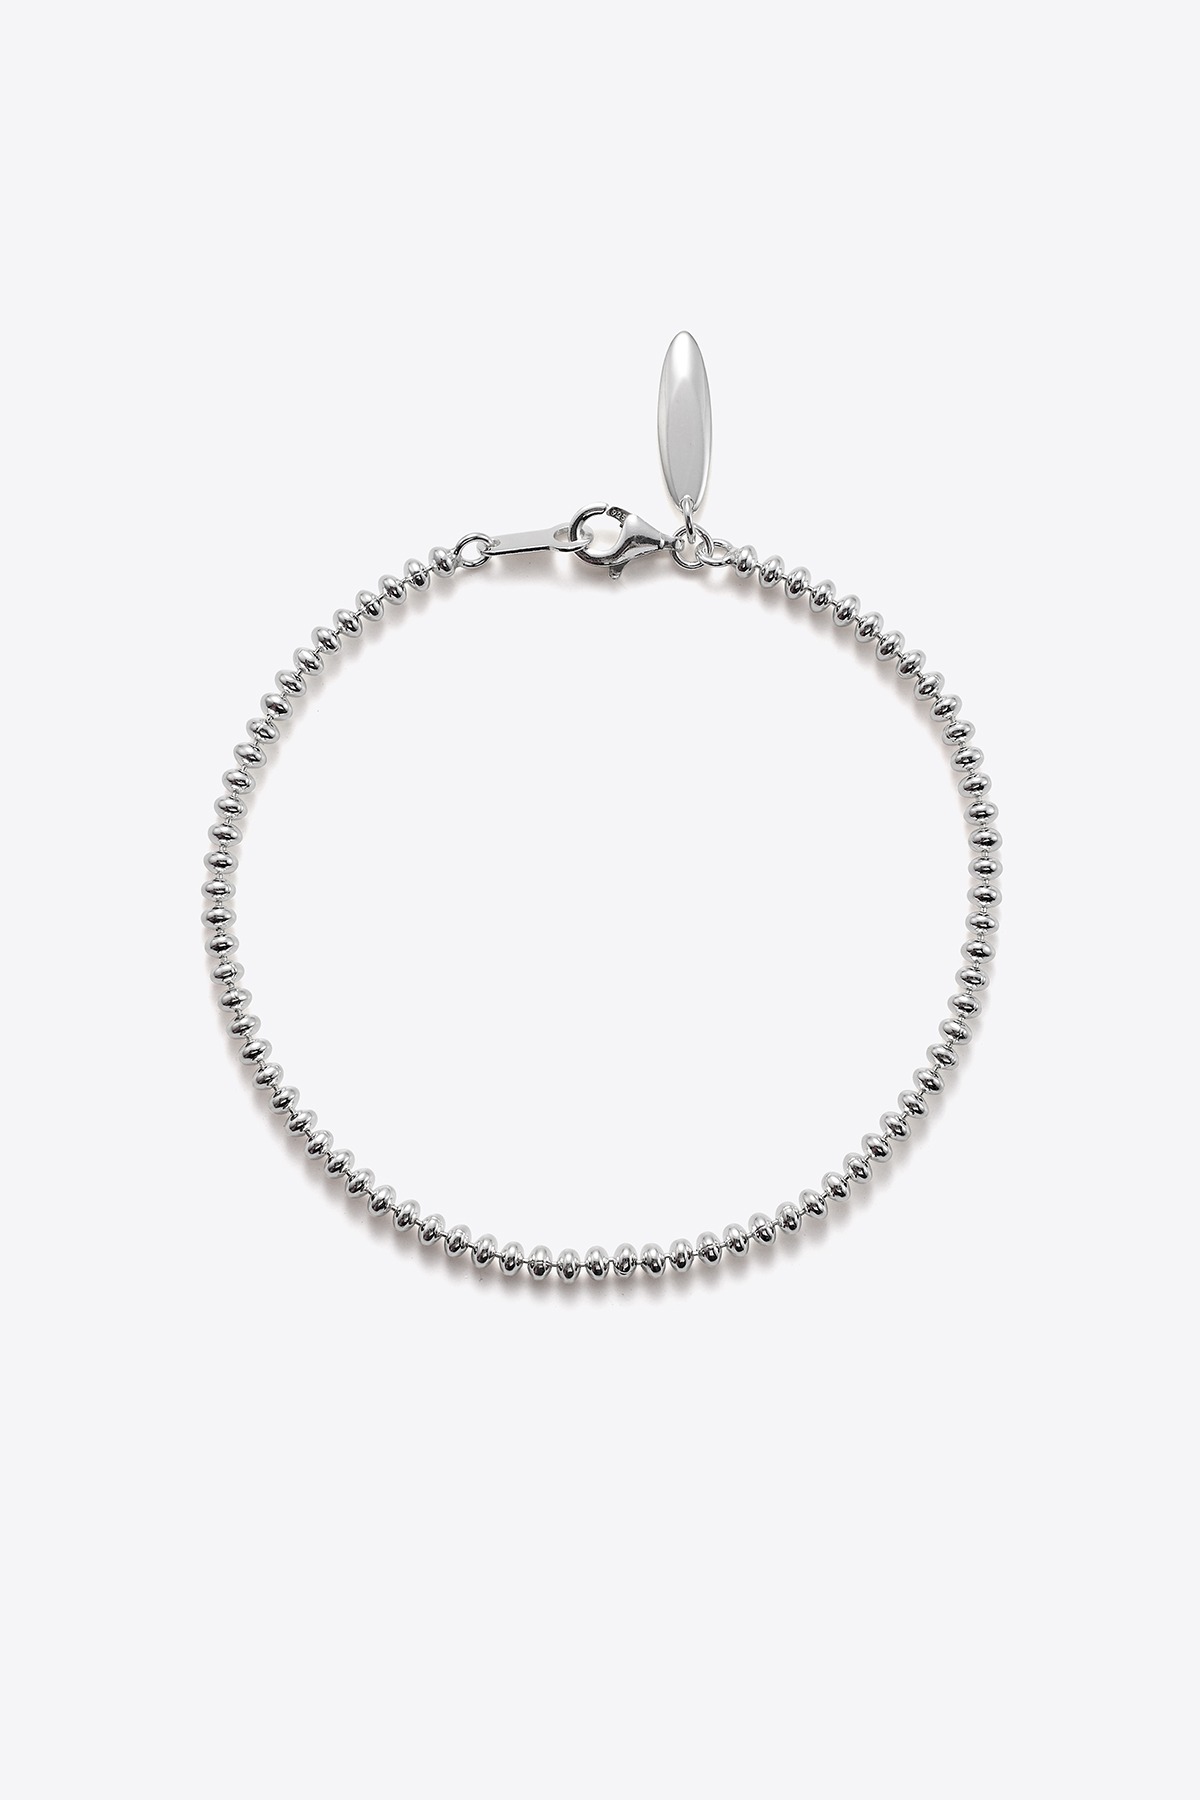 2.8 Oval bead Chain Bracelet